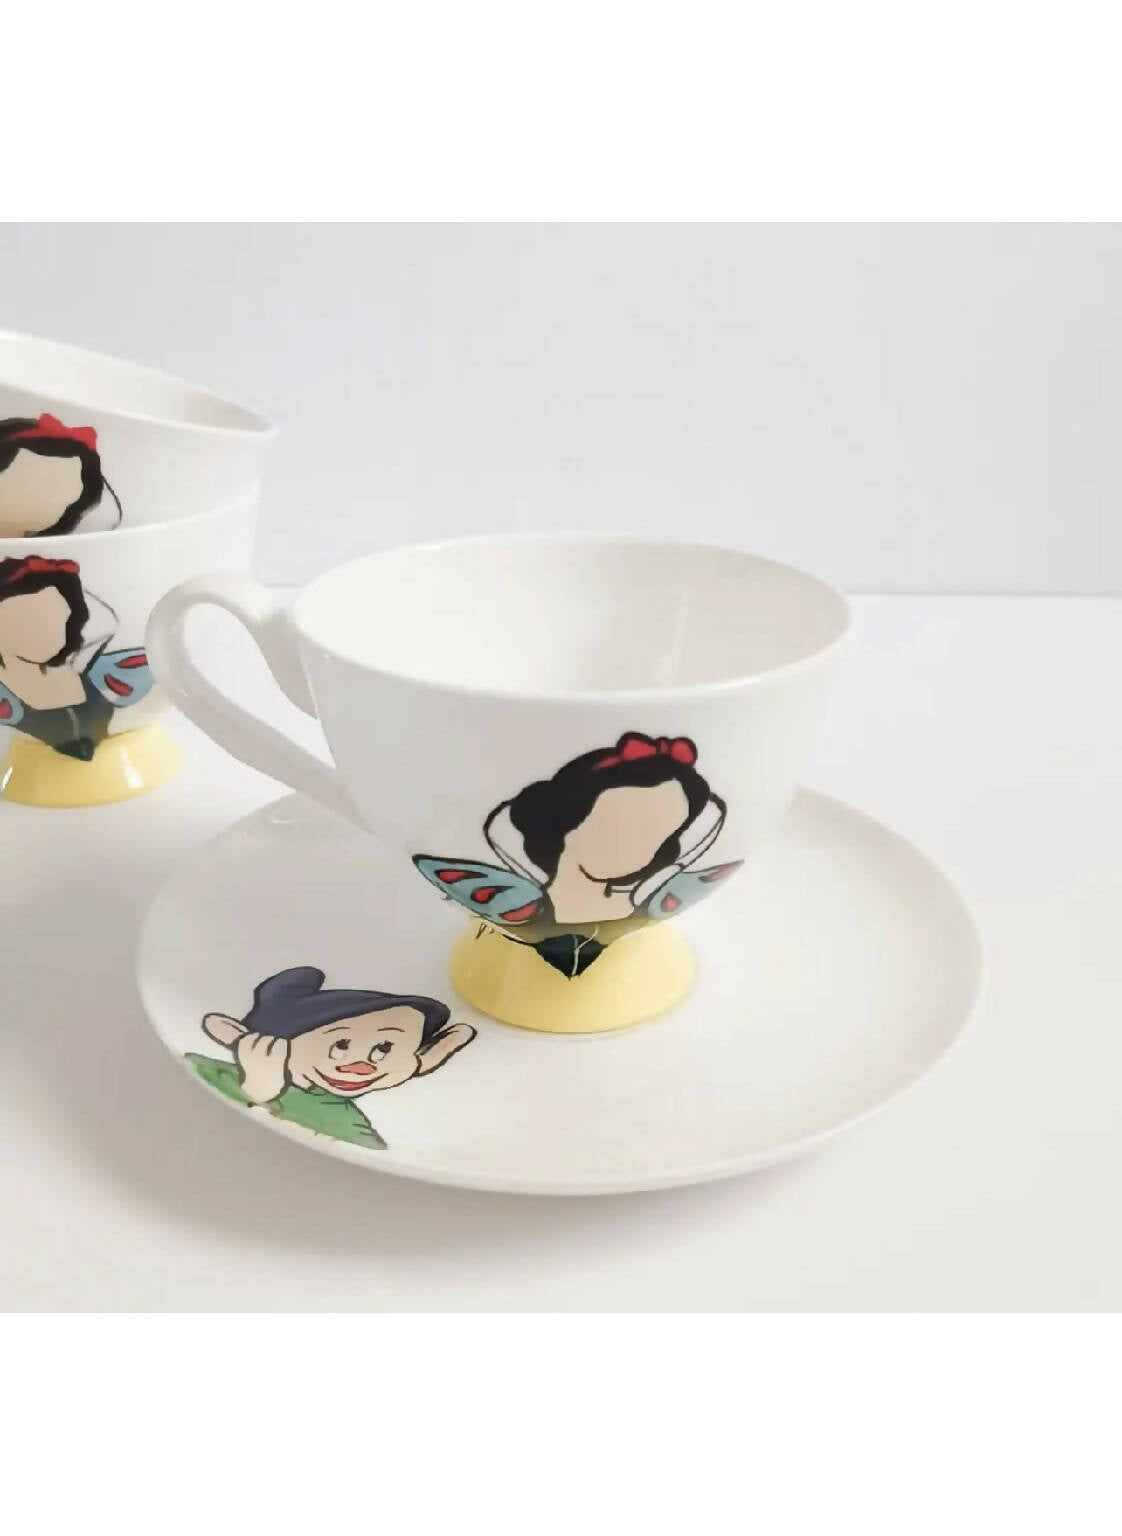 Snow White Cup - كوب بياض الثلج